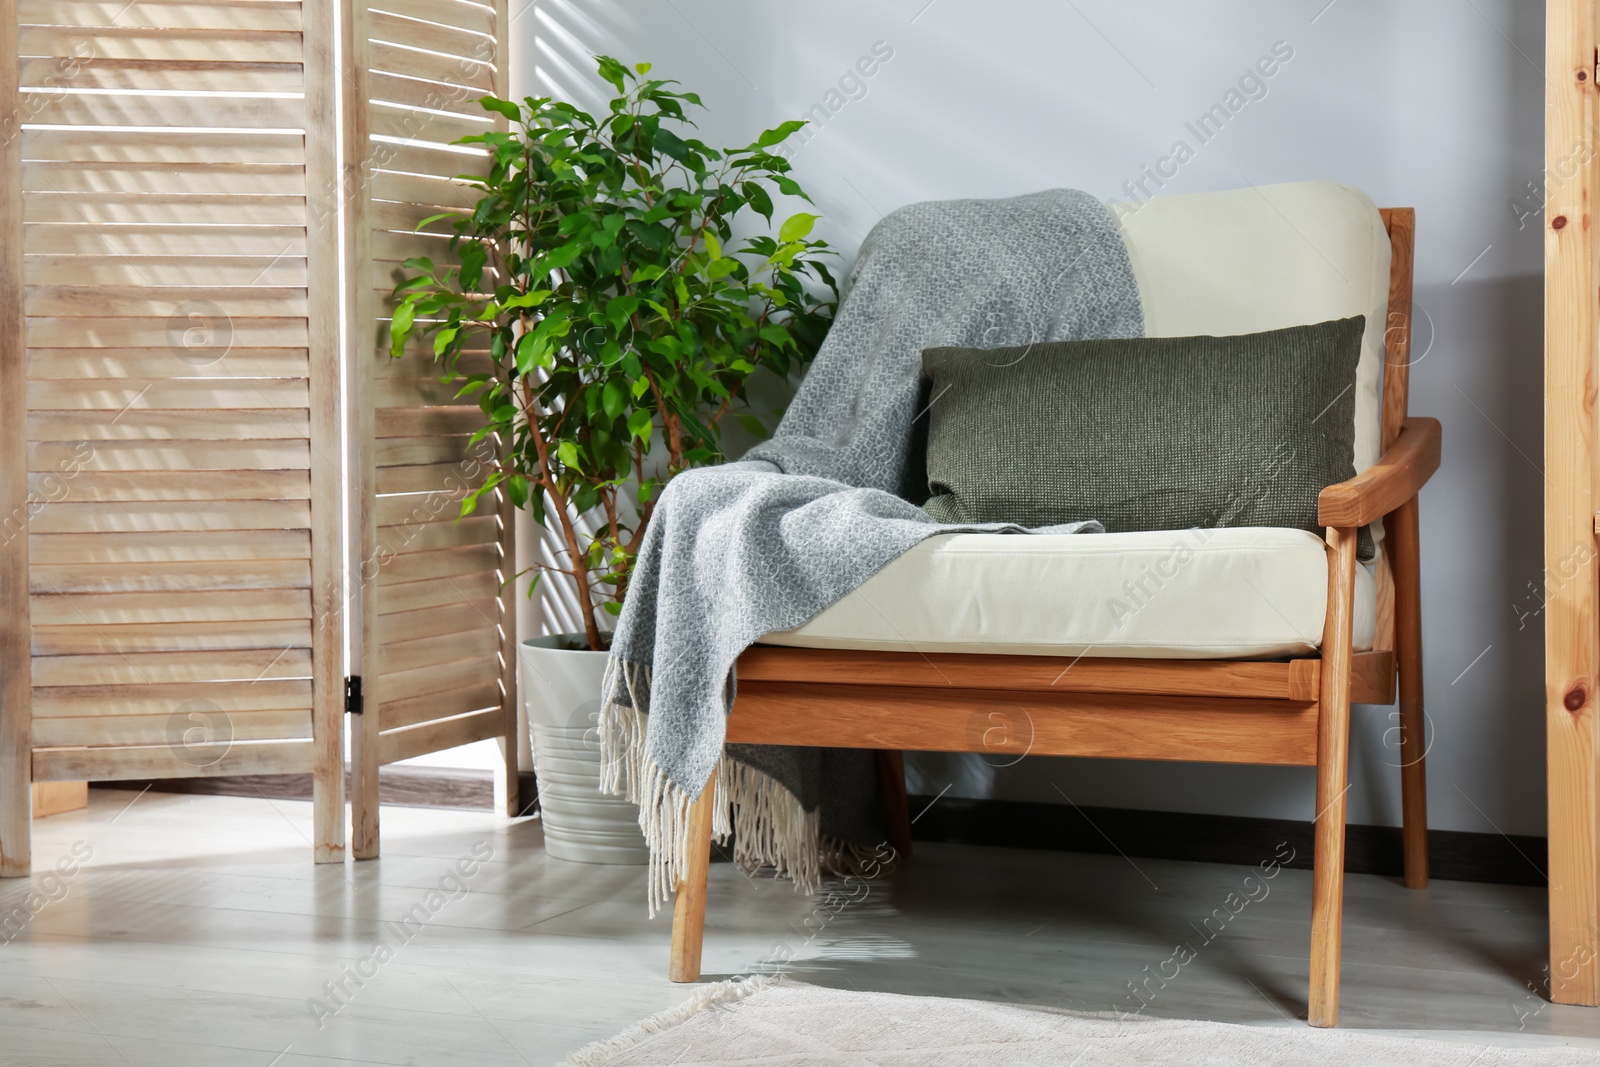 Photo of Wooden armchair, green houseplant and folding screen near light wall. Interior design